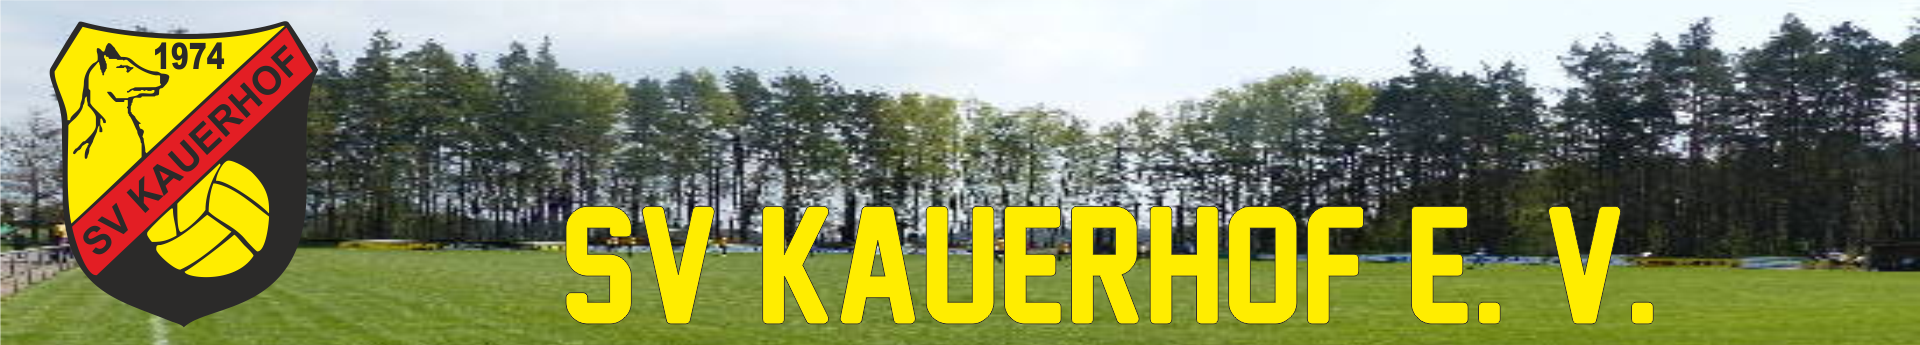 SV Kauerhof Title Image